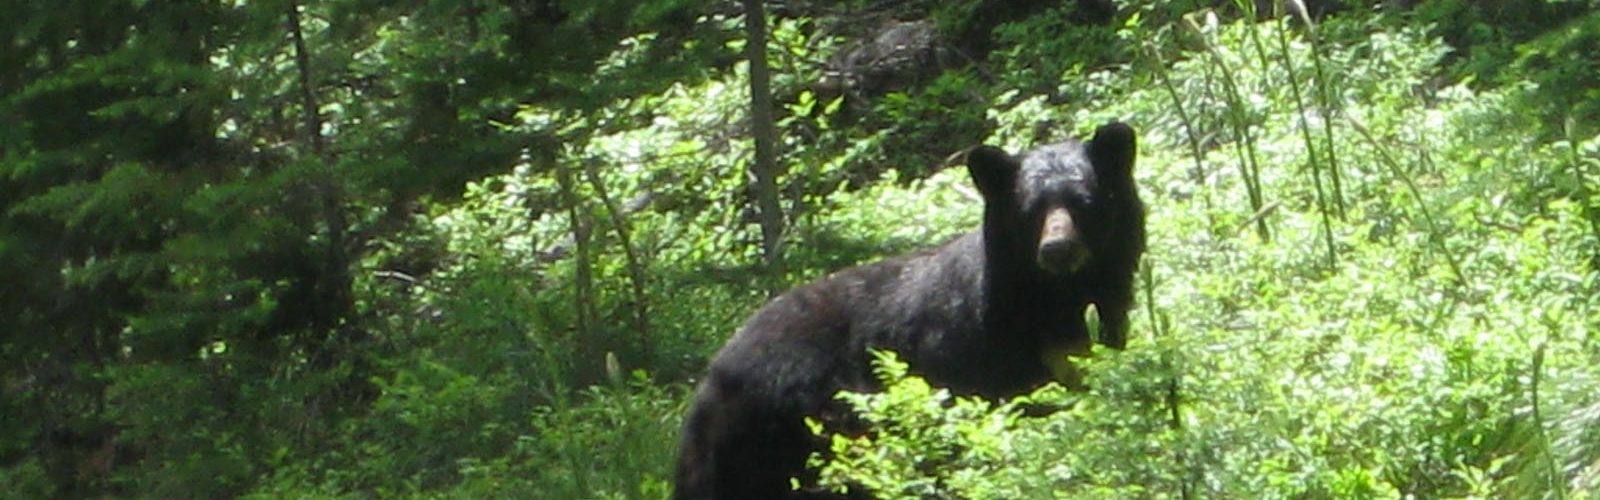 Black bear in woods